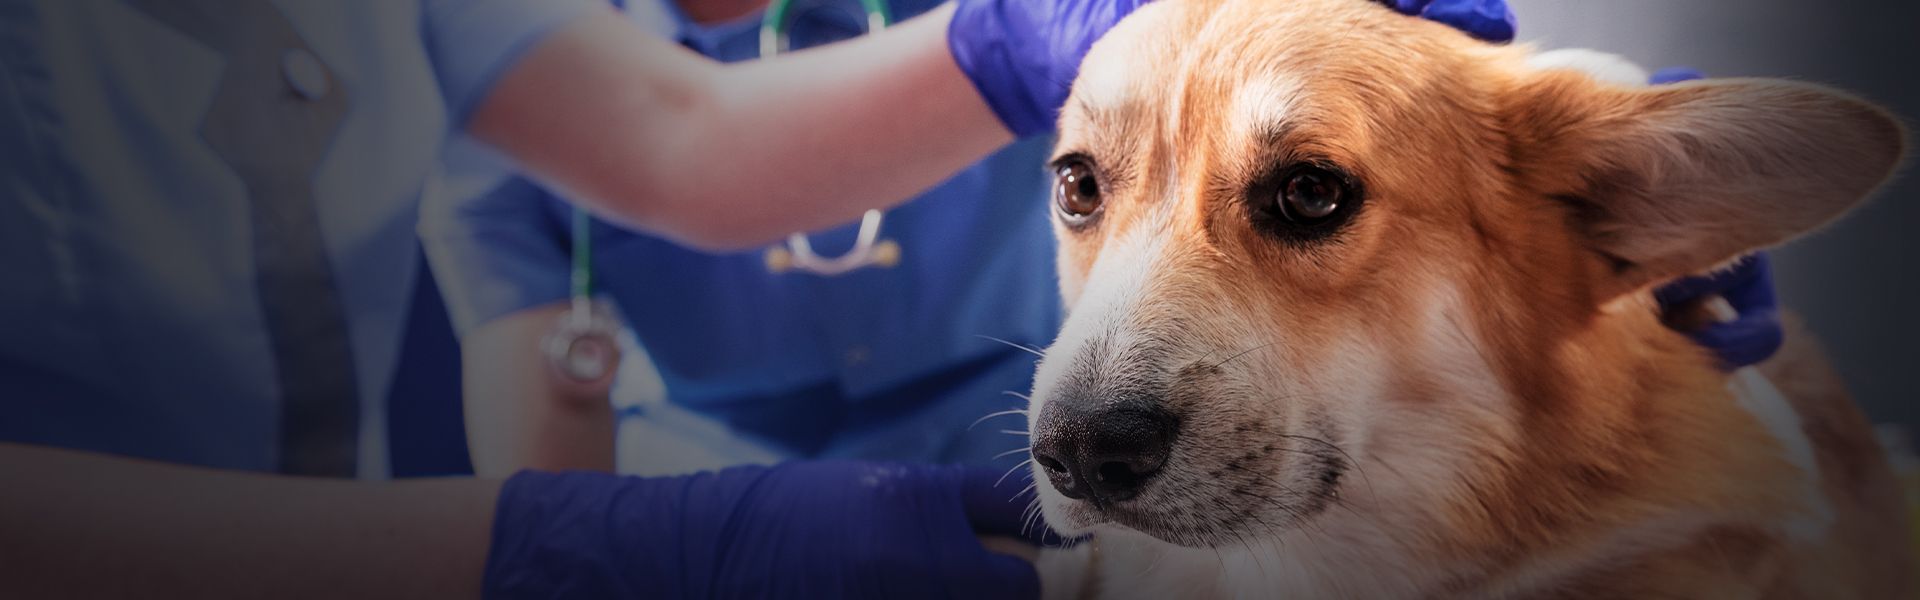 veterinarians preparing a corgi dog for surgery